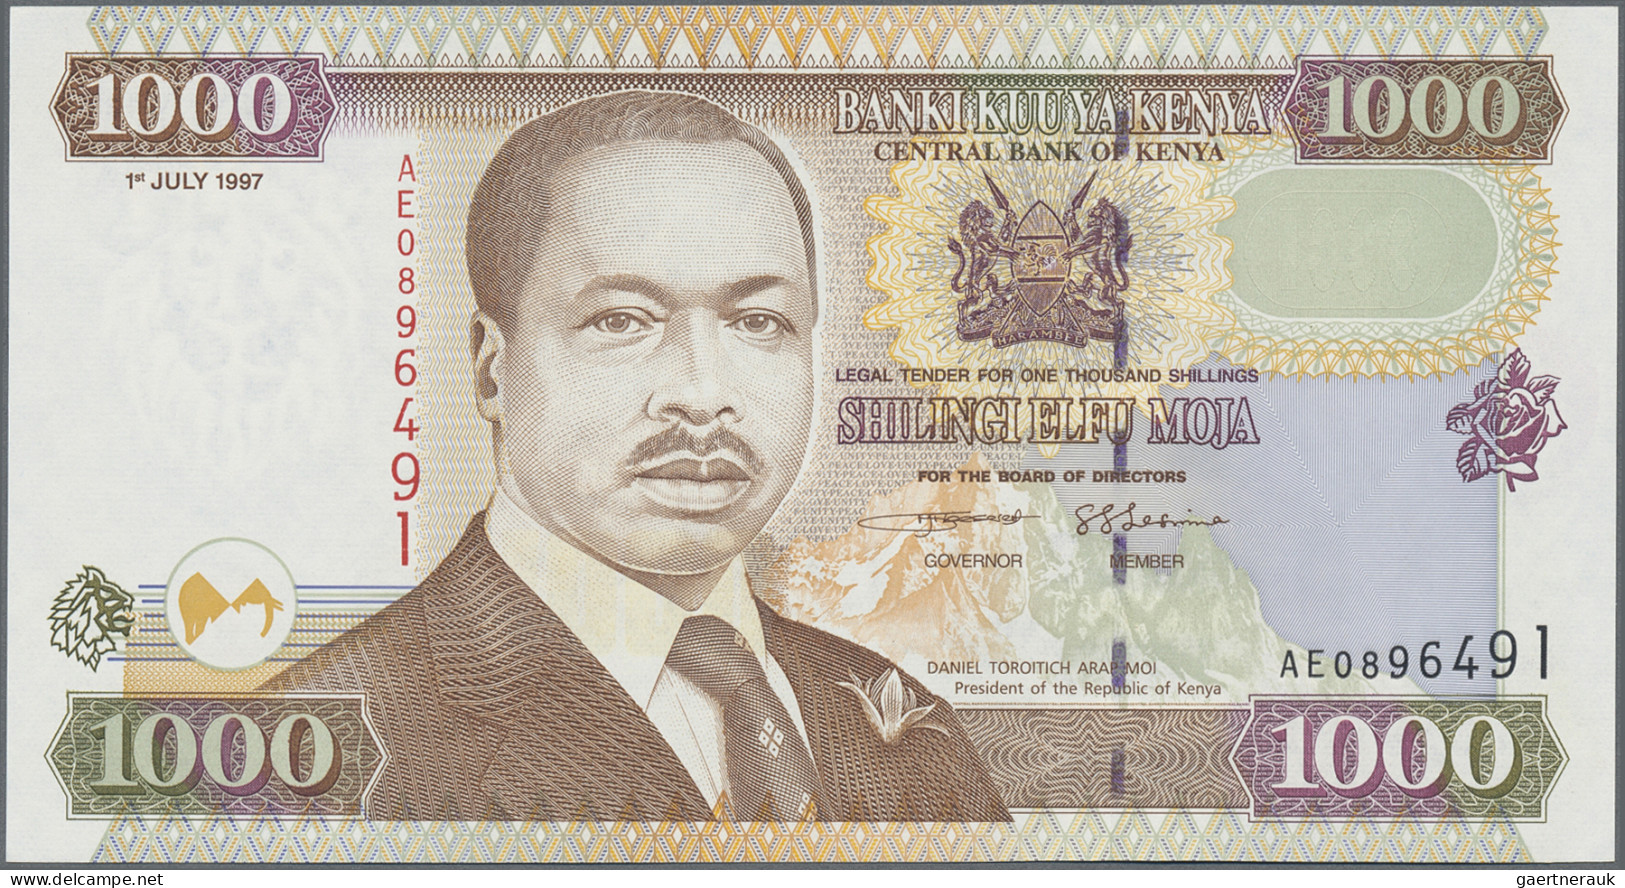 Kenya: Central Bank of Kenya, giant lot with 40 banknotes, series 1978-2008, com